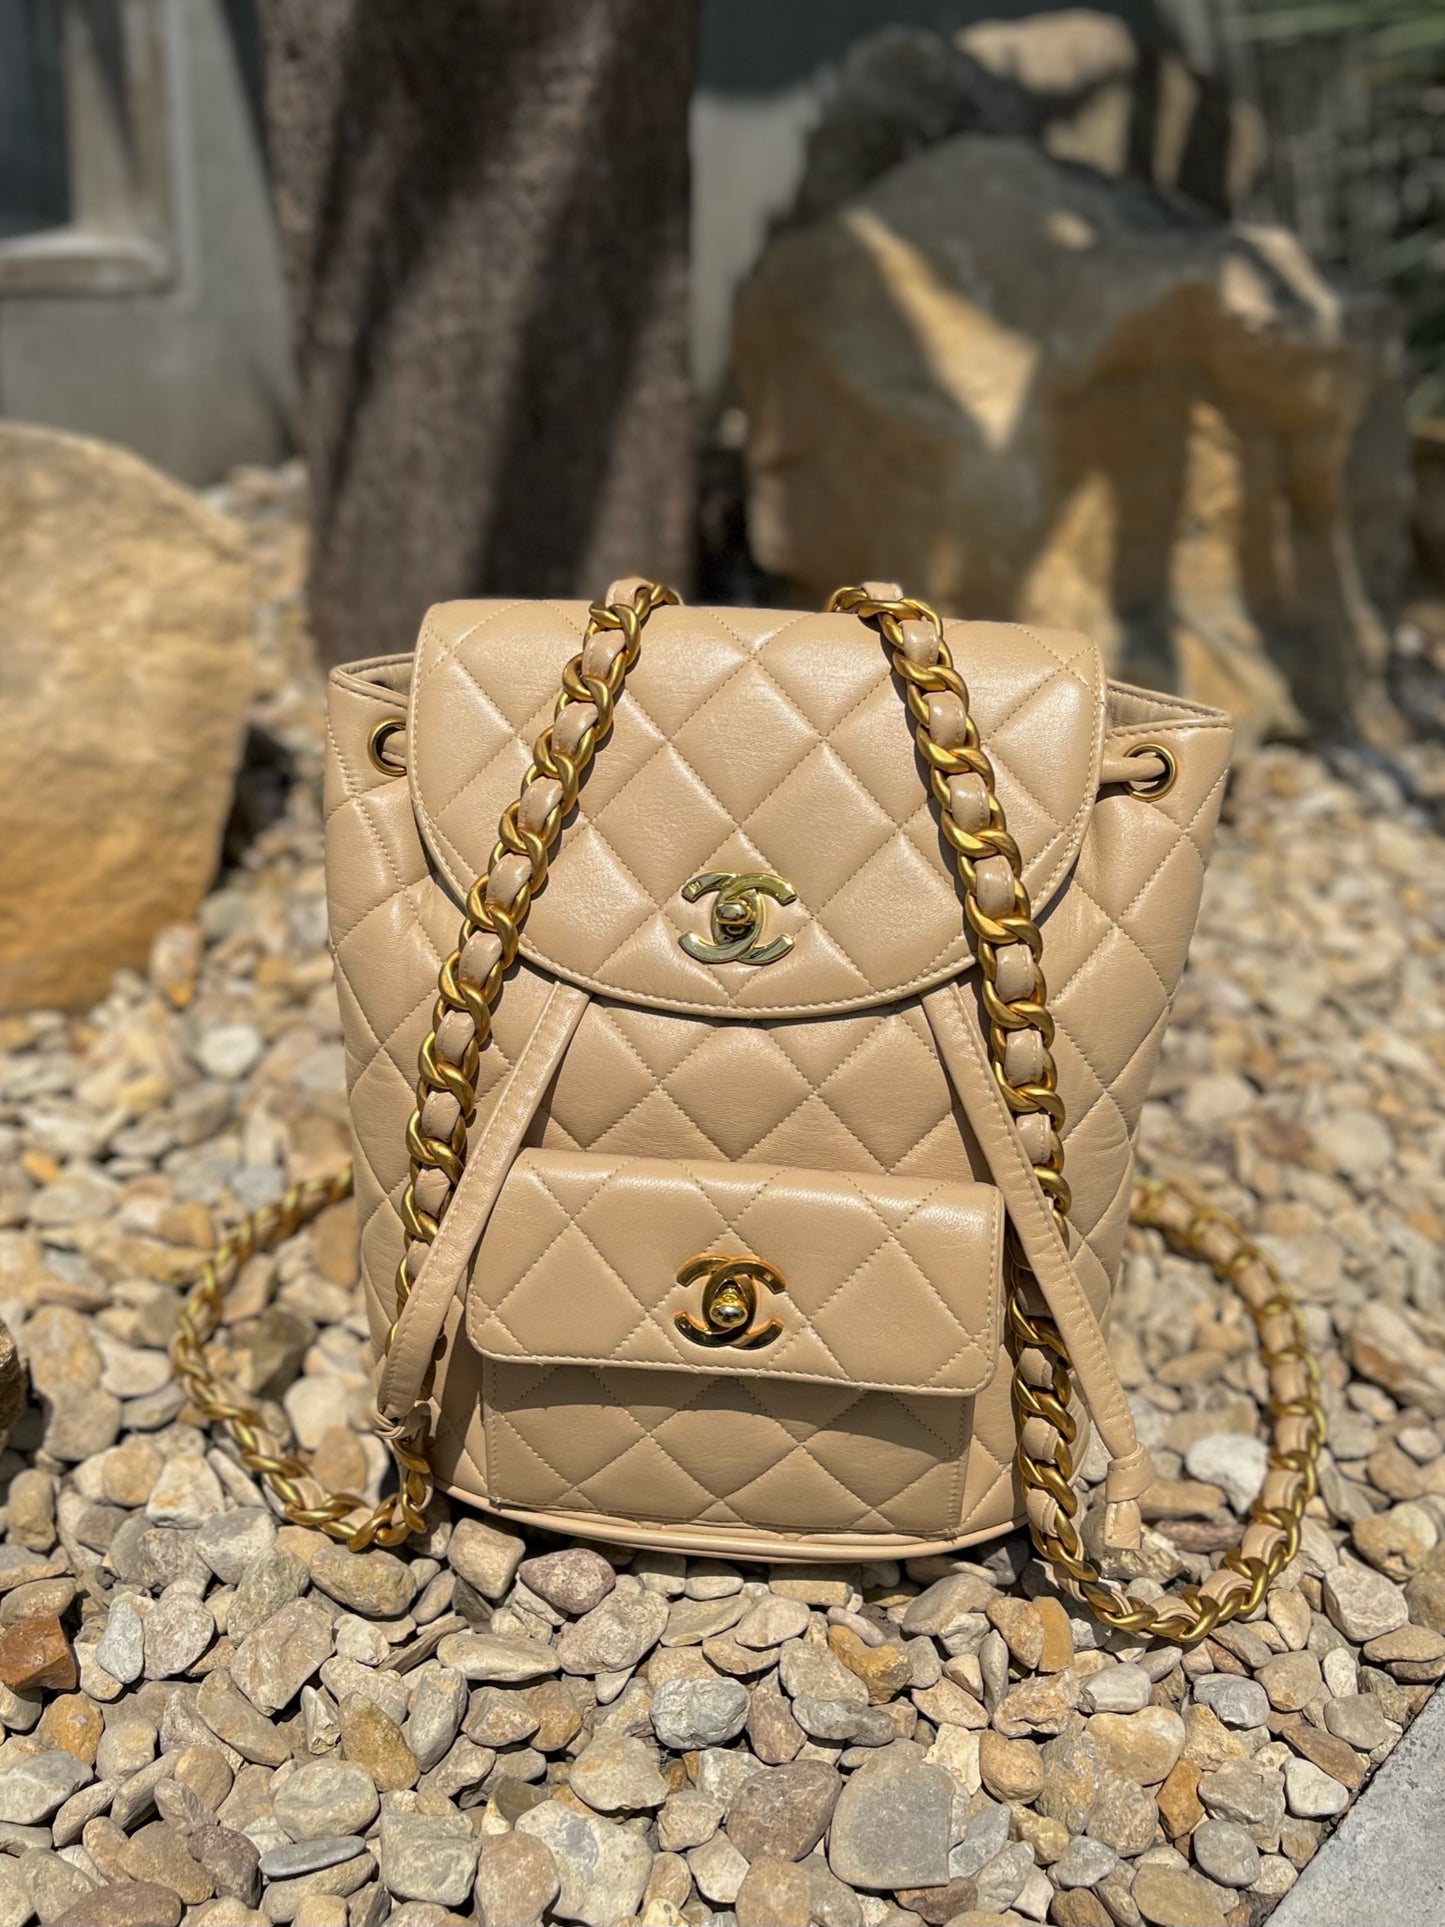 Chanel Quilted Mini Duma Backpack - Brown Backpacks, Handbags